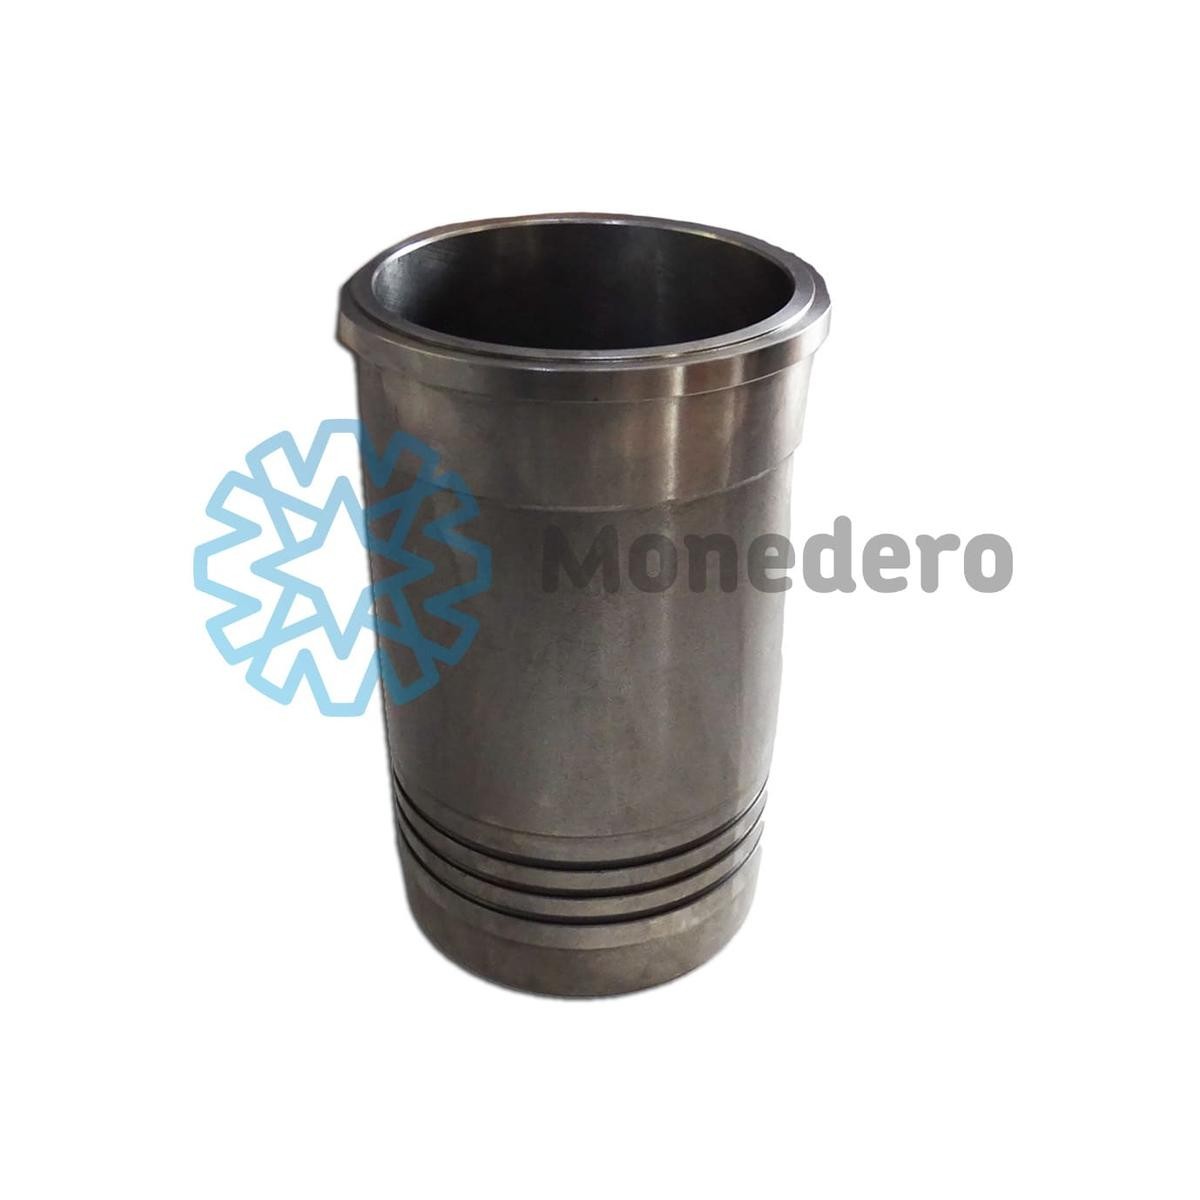 MONEDERO 30011300003 Cylinder Sleeve 504094025